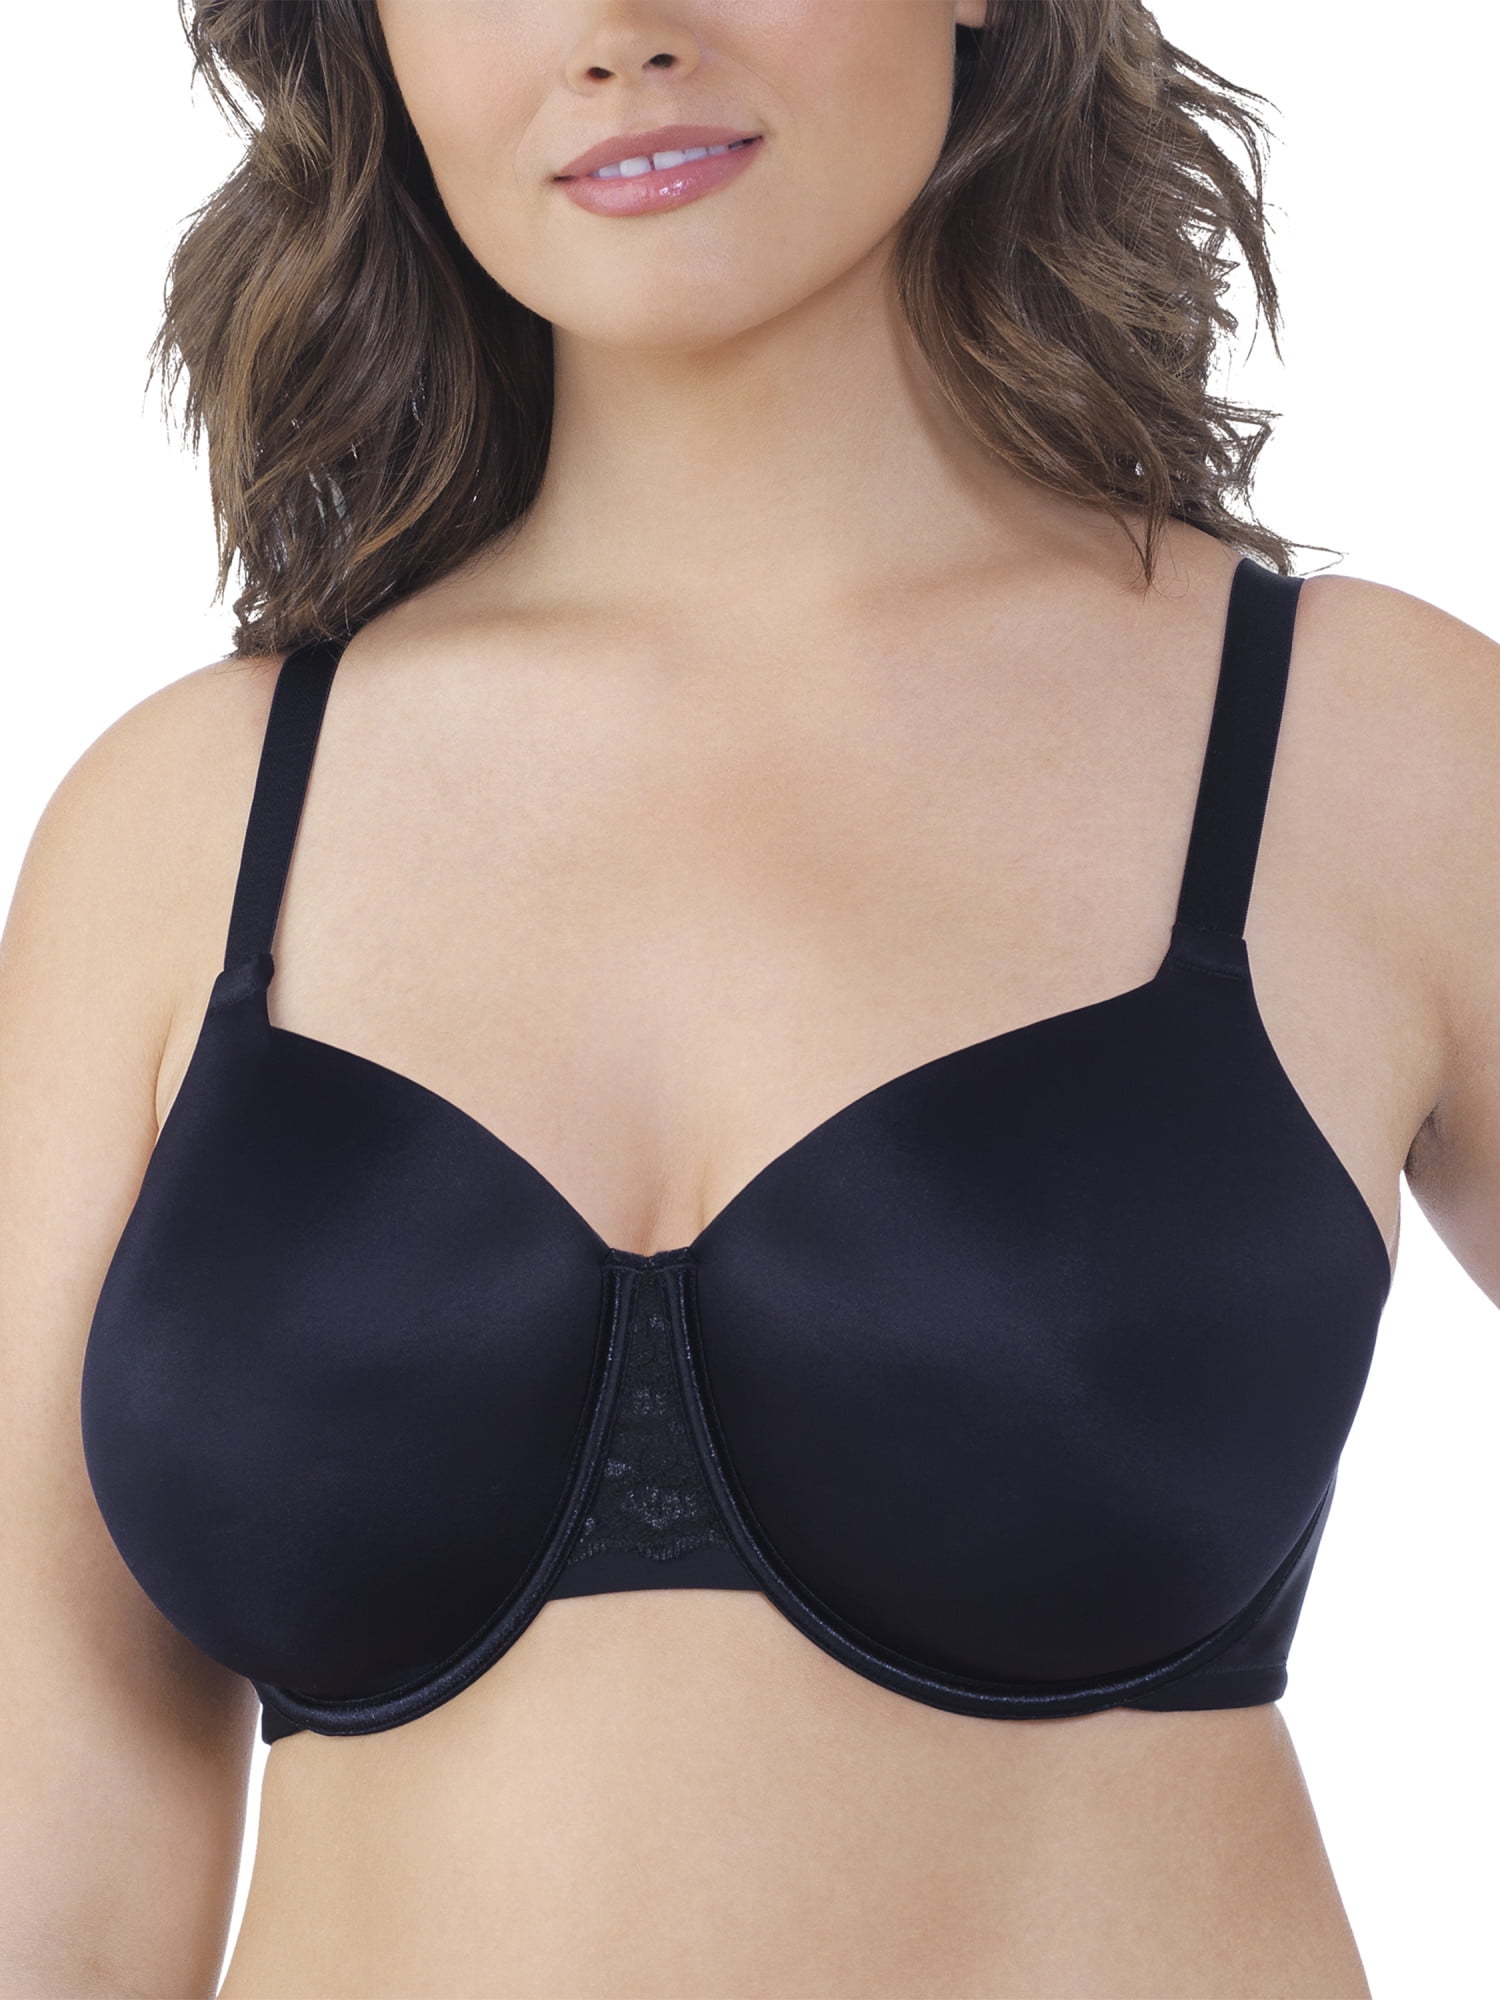 Curvation Women Adjustable Seamless bras 